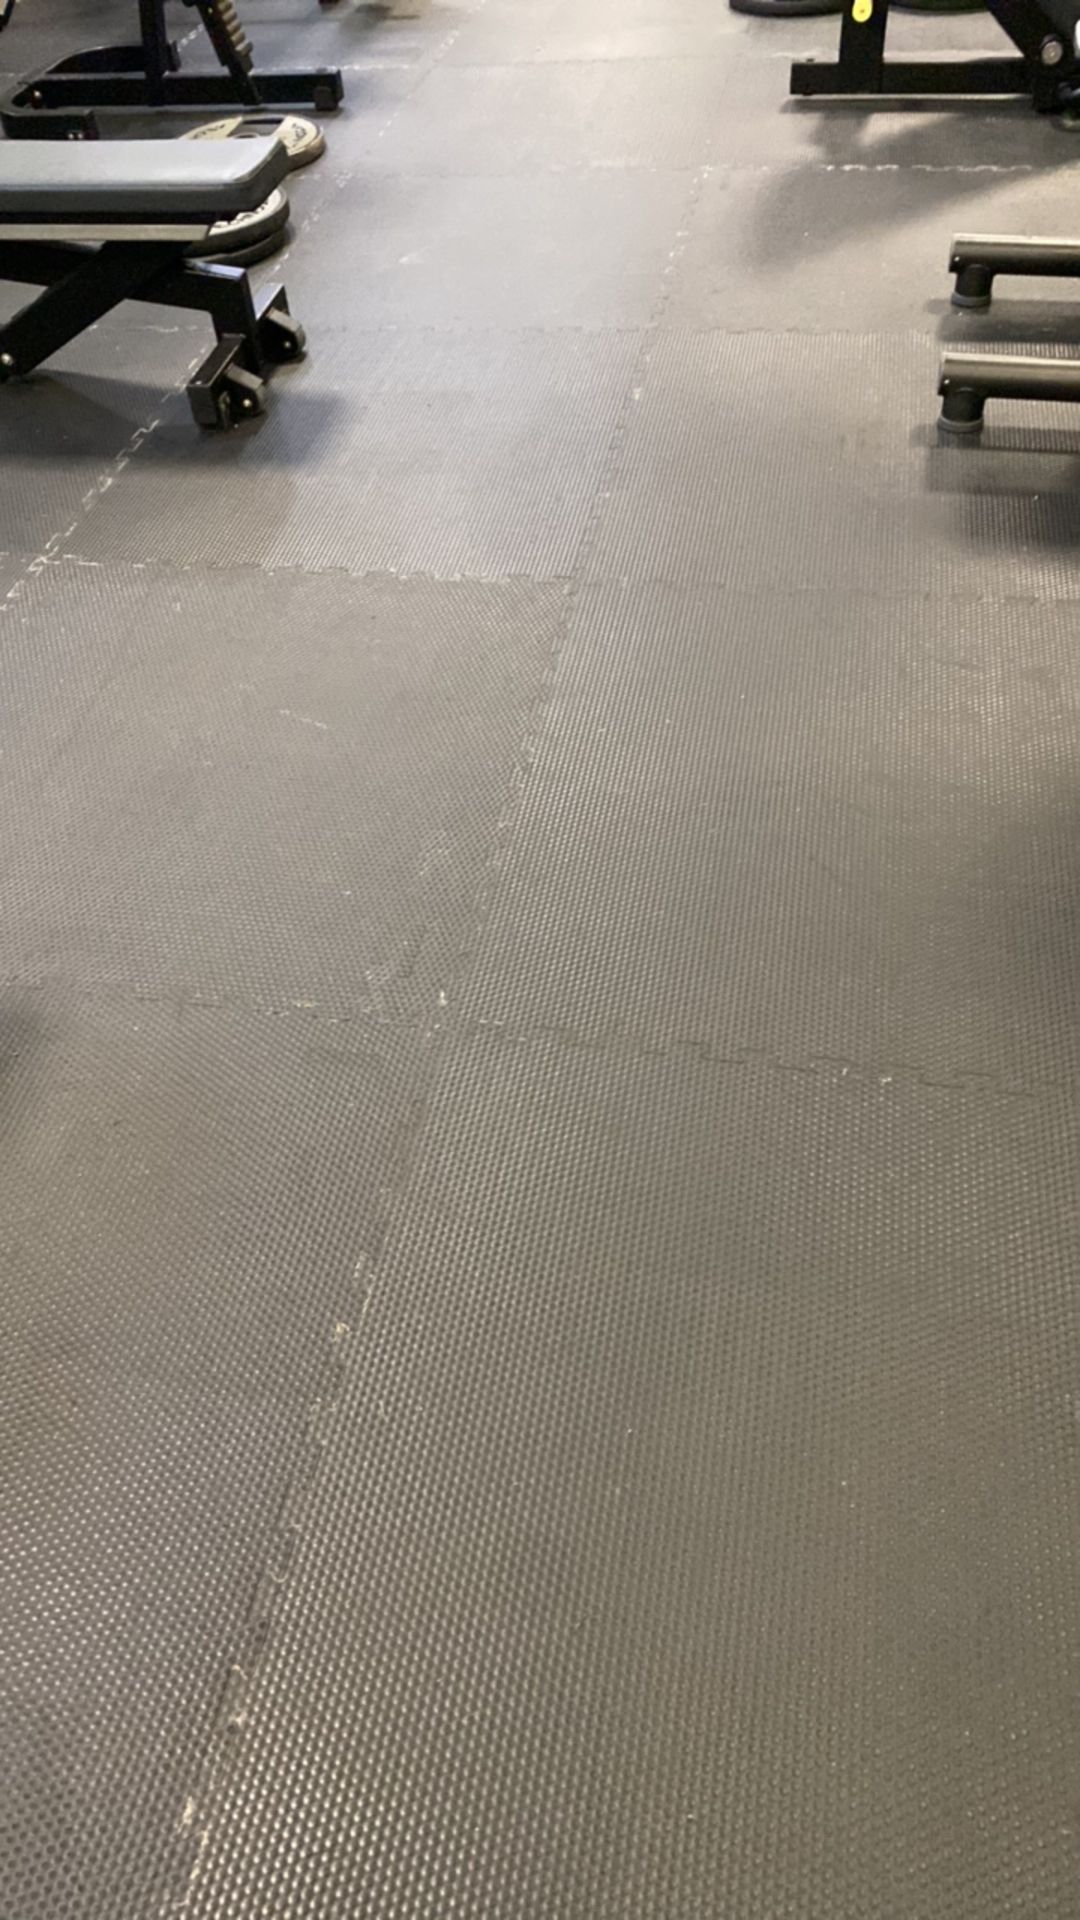 10x Gym matt flooring tiles - Image 3 of 4